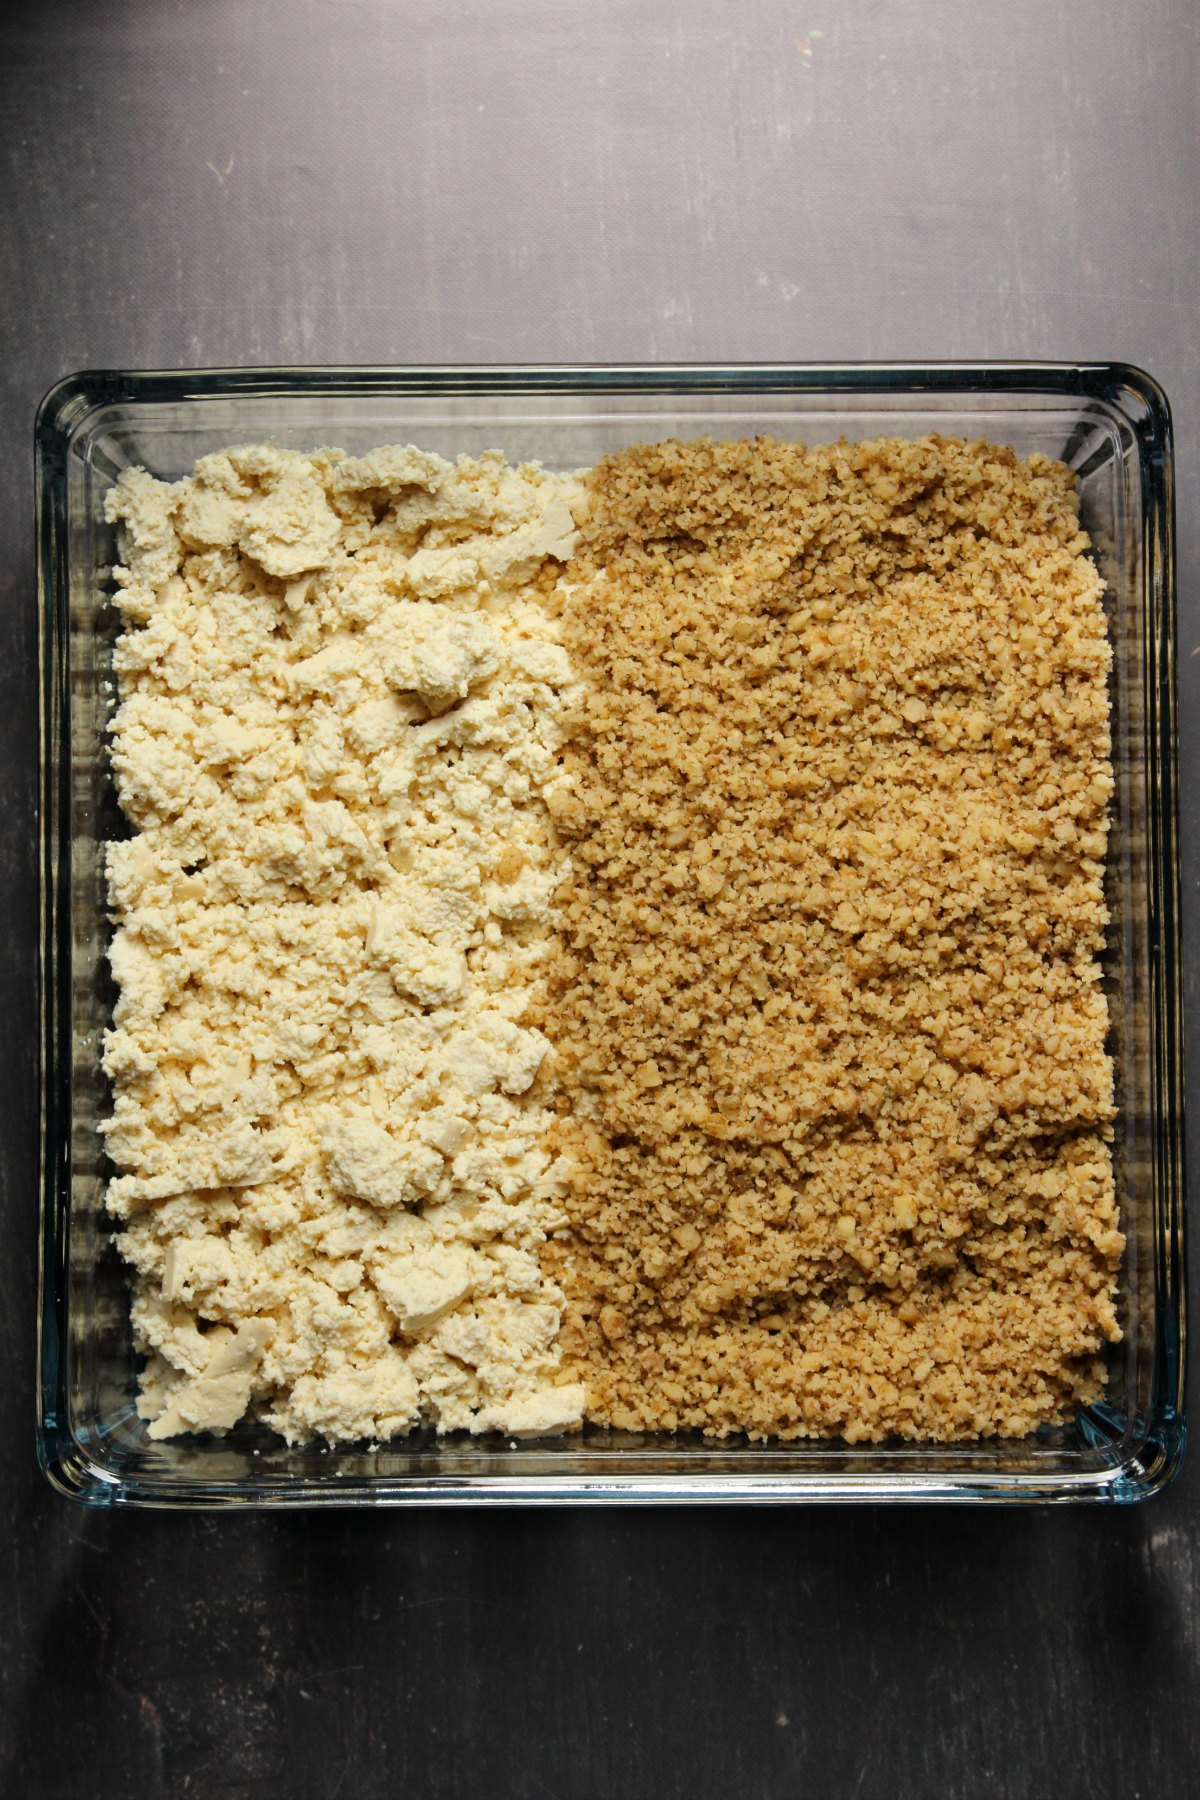 Crumbled tofu and walnuts in a square glass dish.